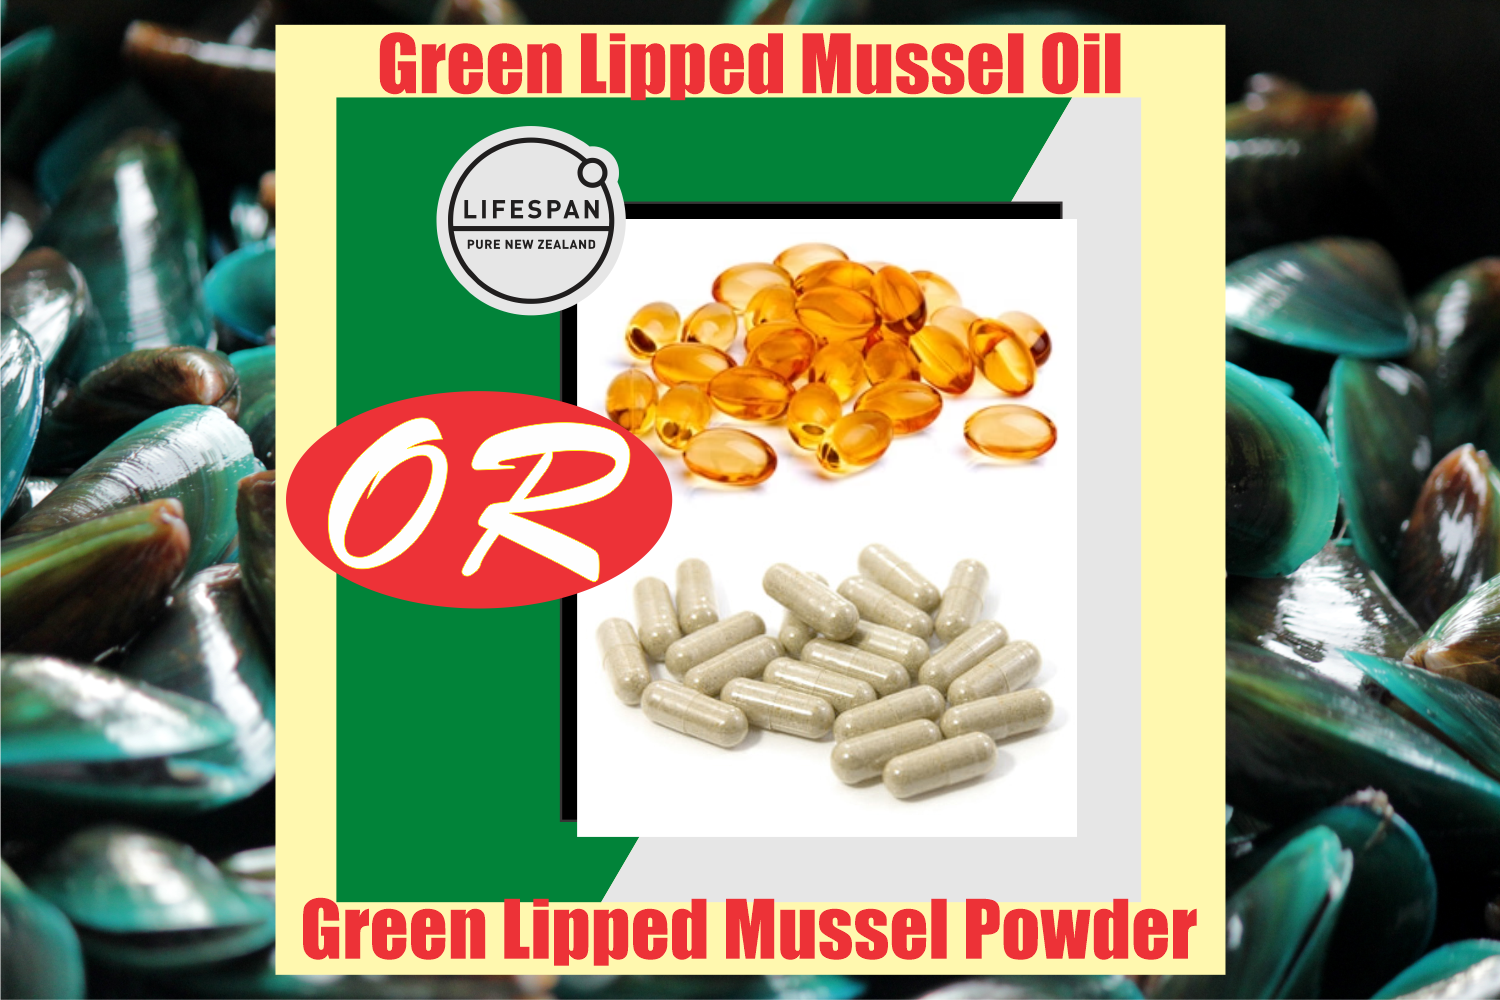 Green Lipped Mussel Oil vs Green Lipped Mussel Powder